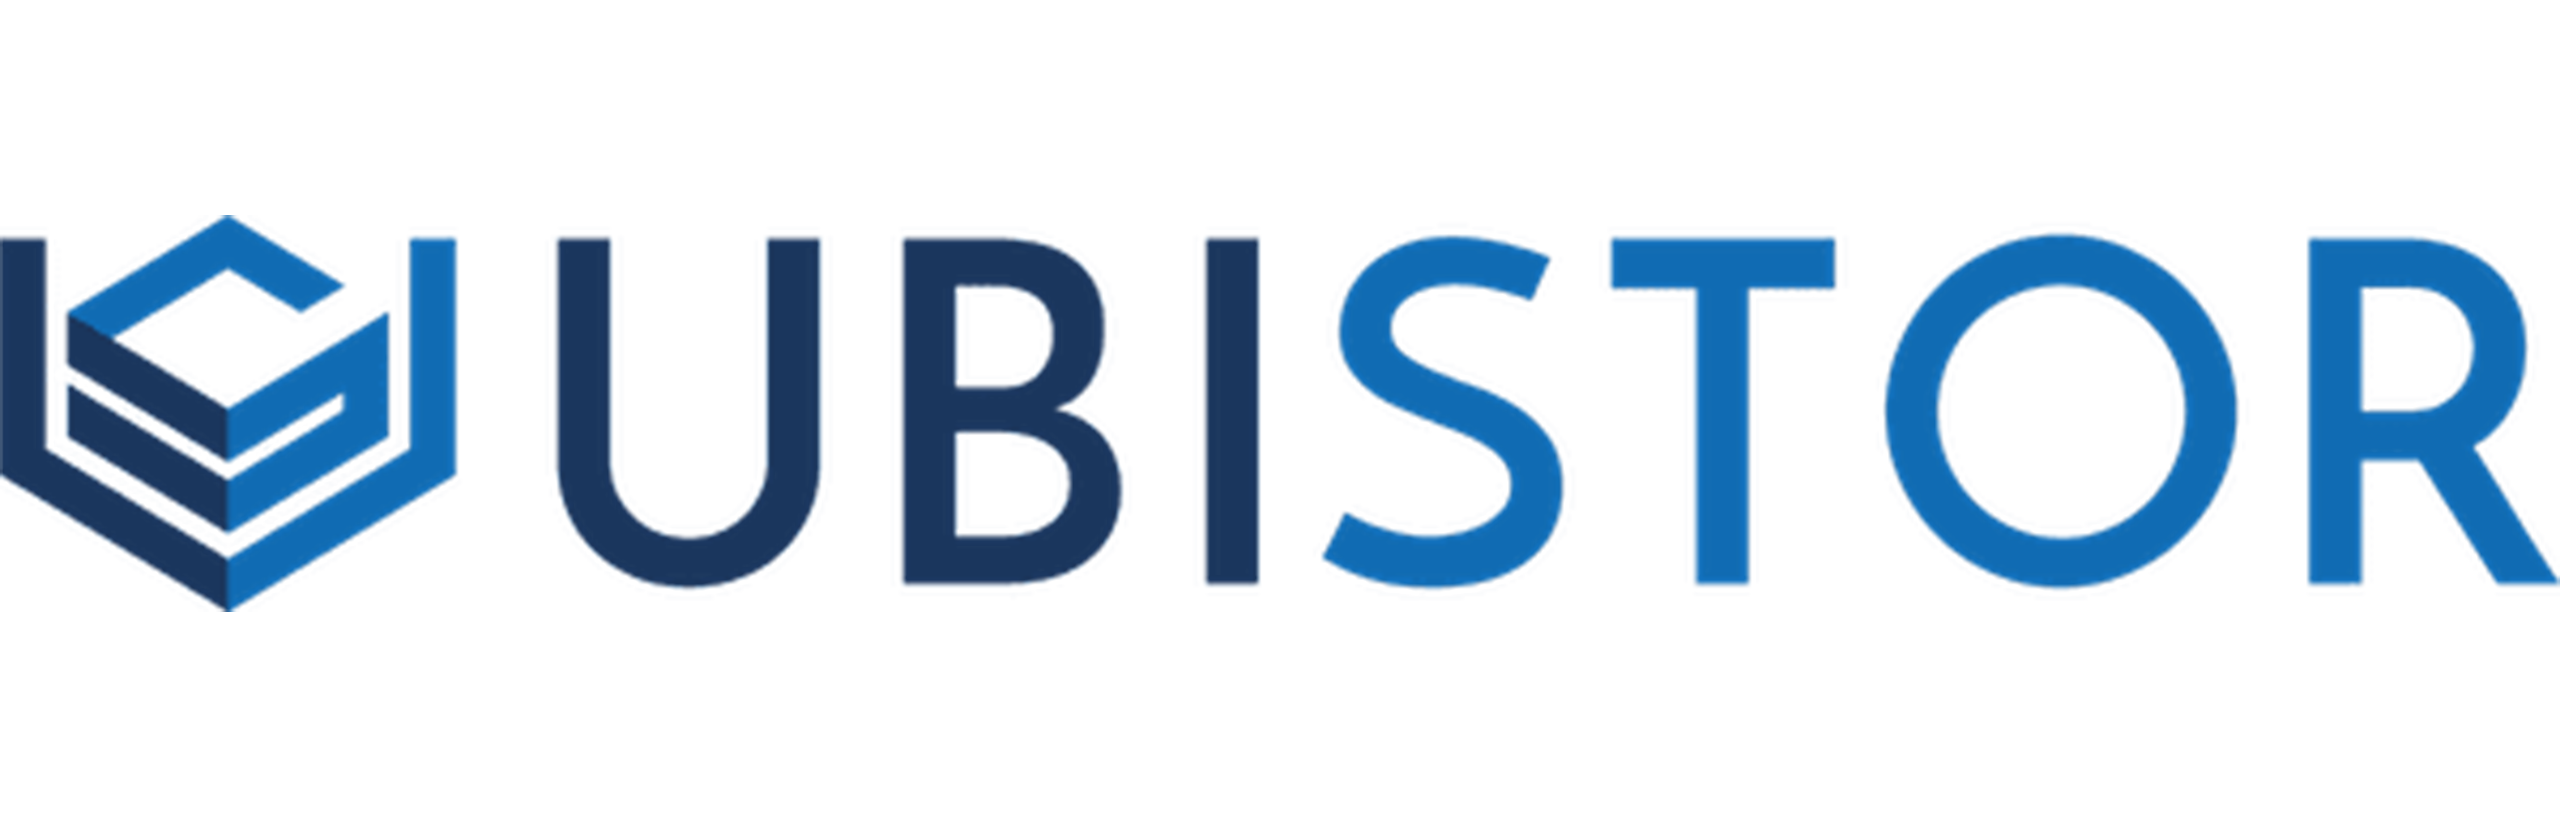 UbiStor Logo